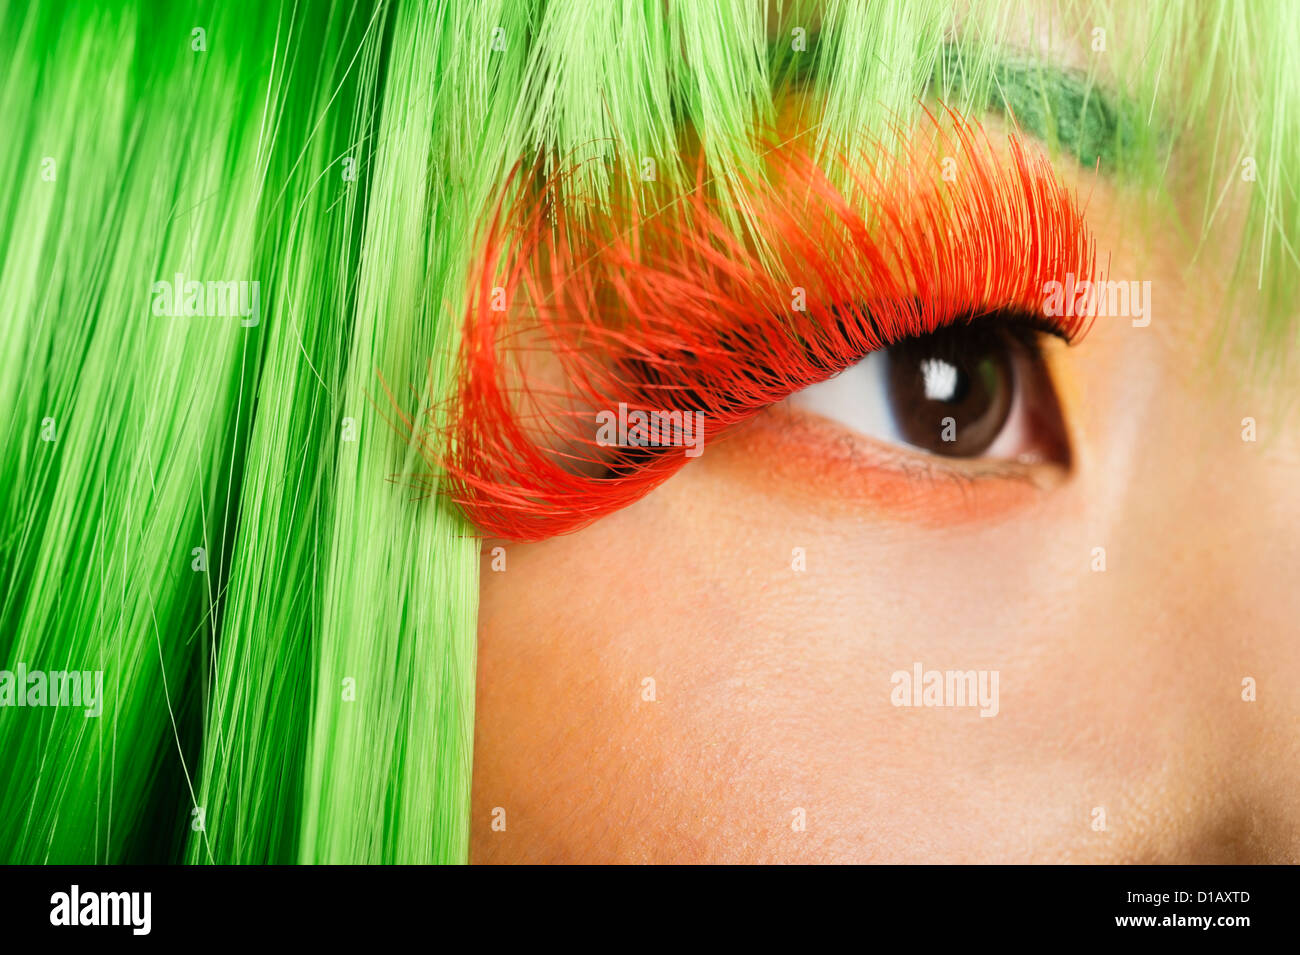 Extreme young woman's face false eyelashes green wig Stock Photo